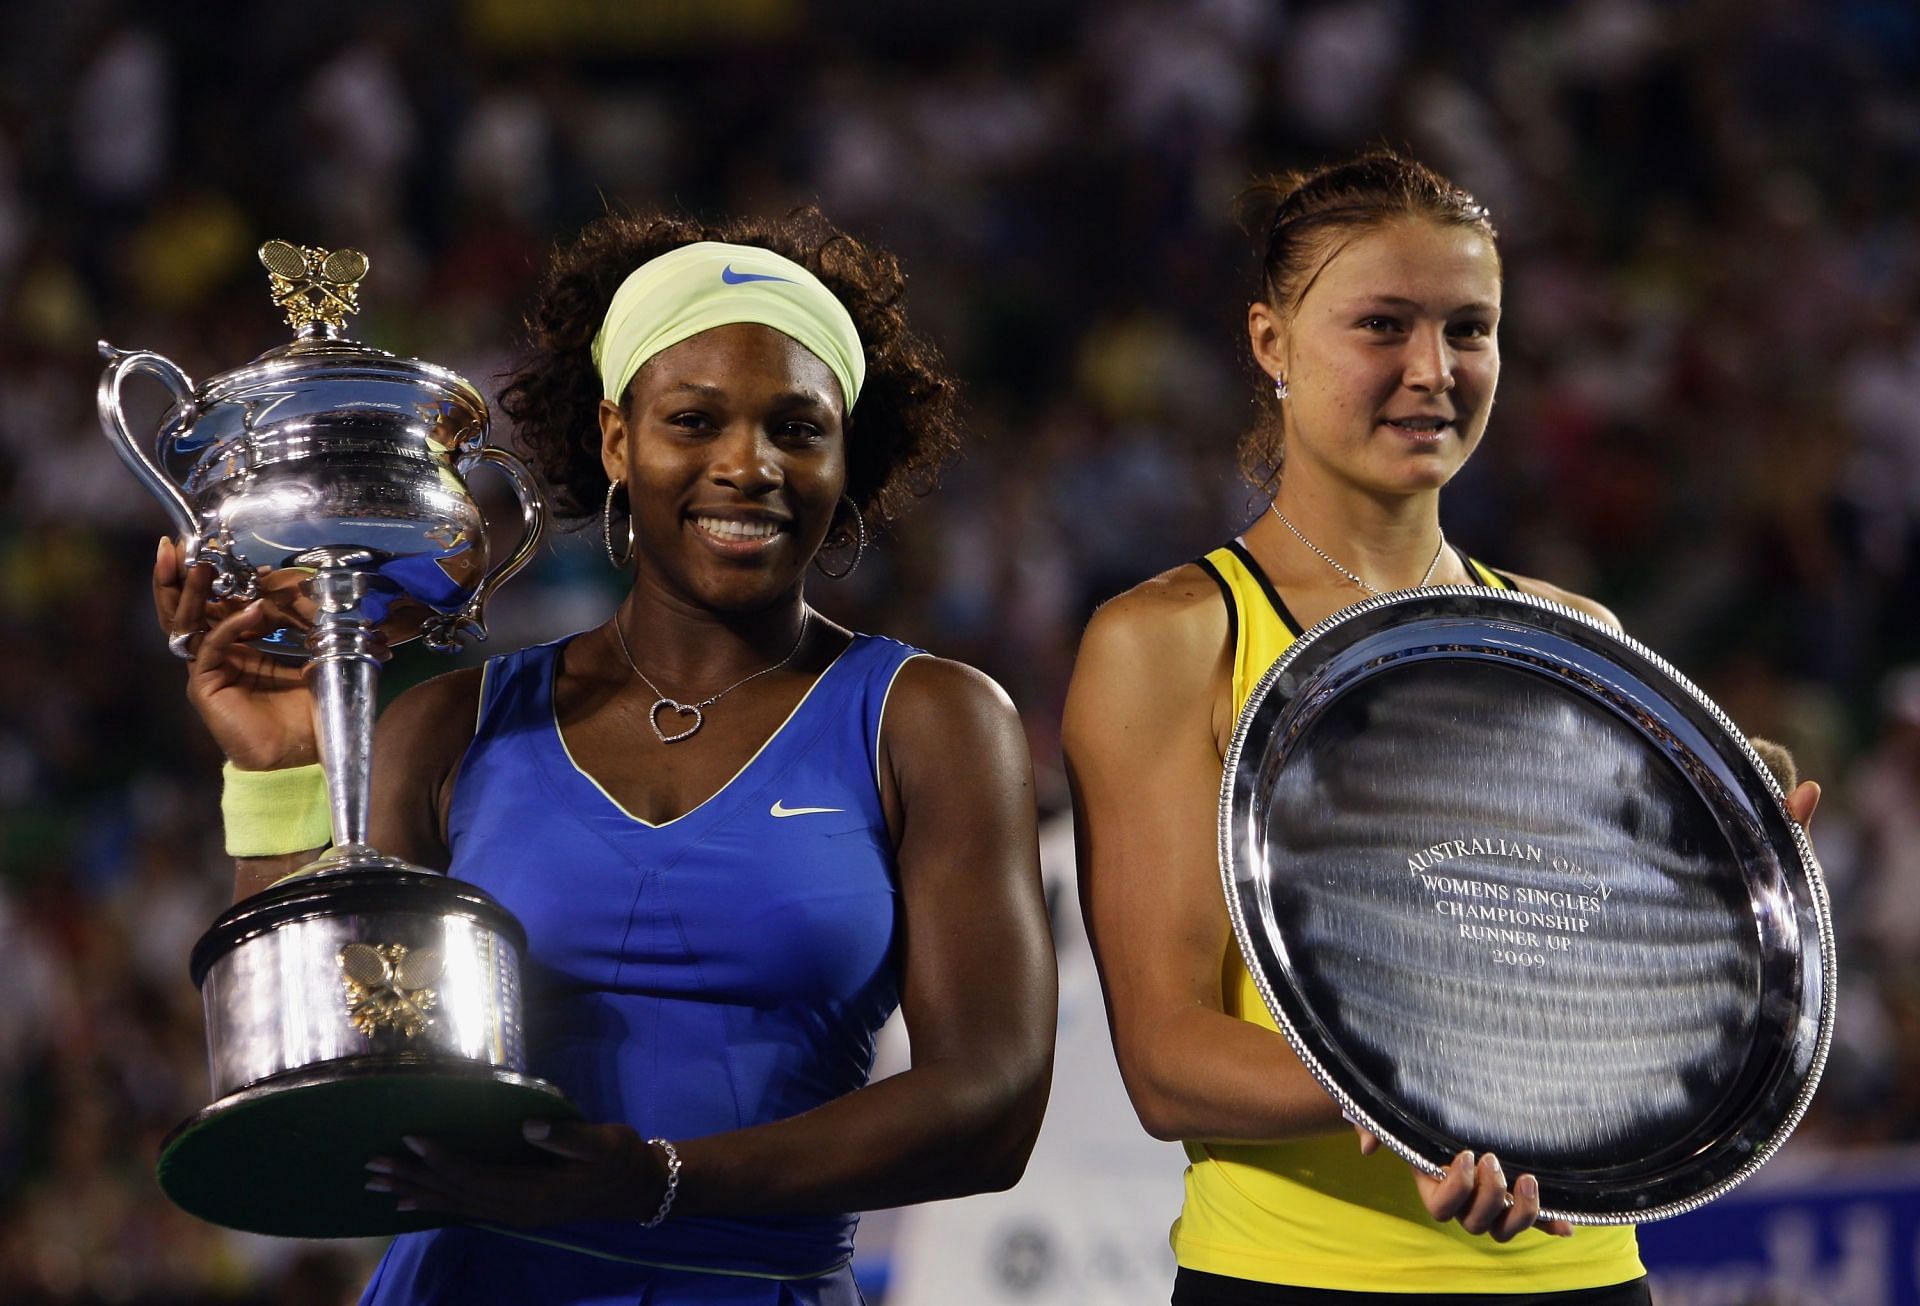 Serena Williams defeated Dinara Safina in the 2009 Australian Open final